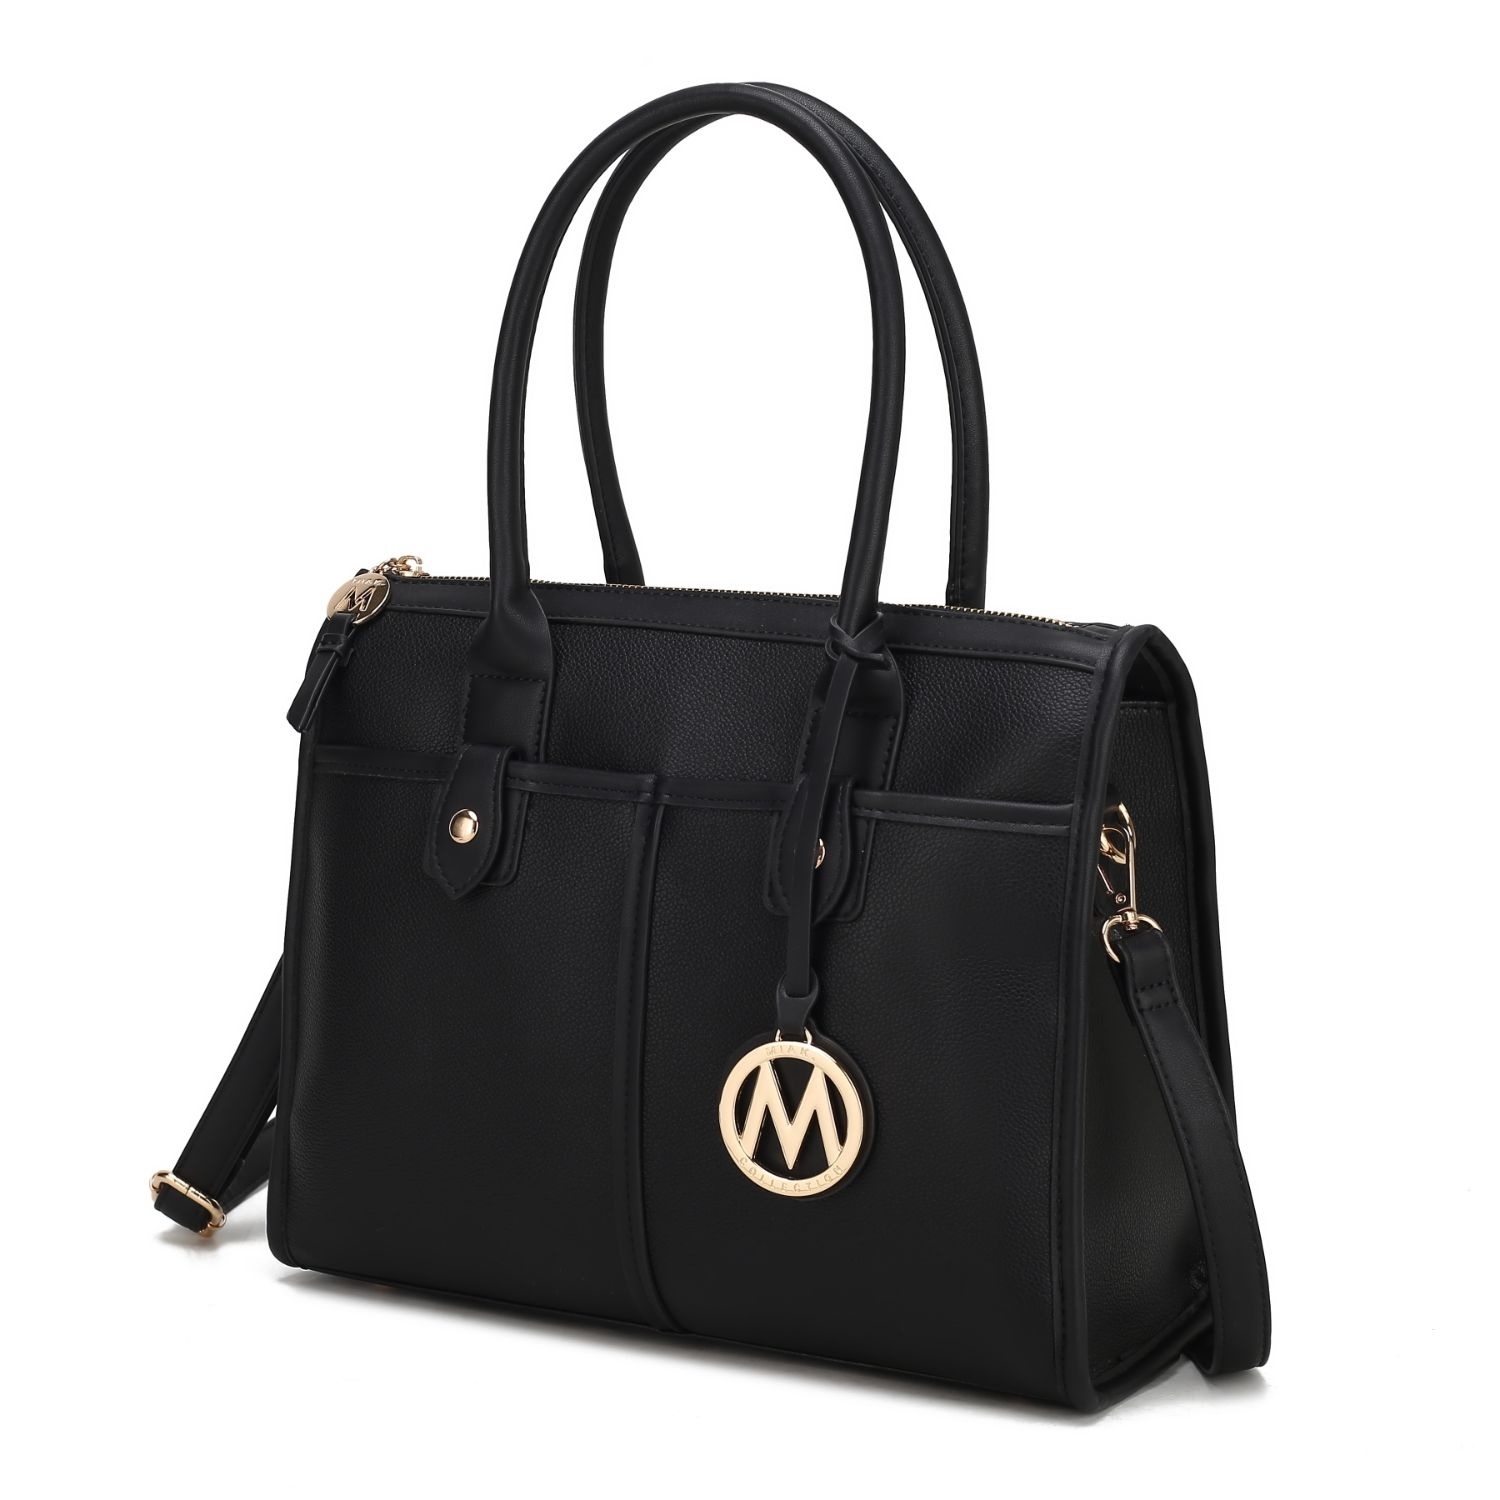 MKF Collection Livia Satchel Handbag By Mia K - Mustard - Olive